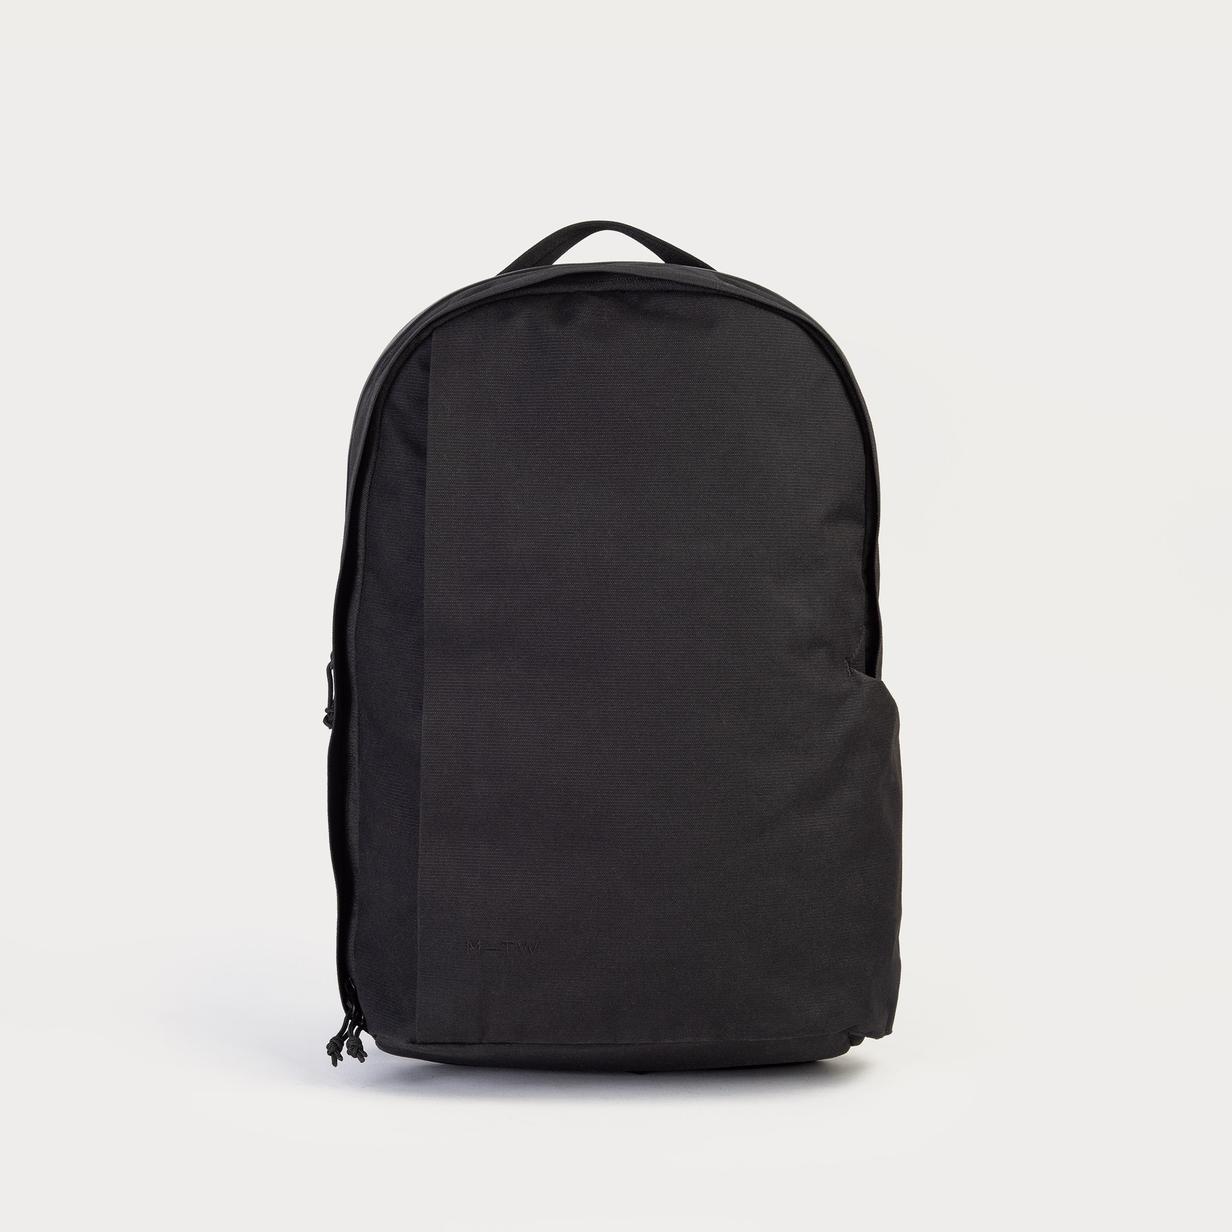 Moment MTW backpack black 17 L 01